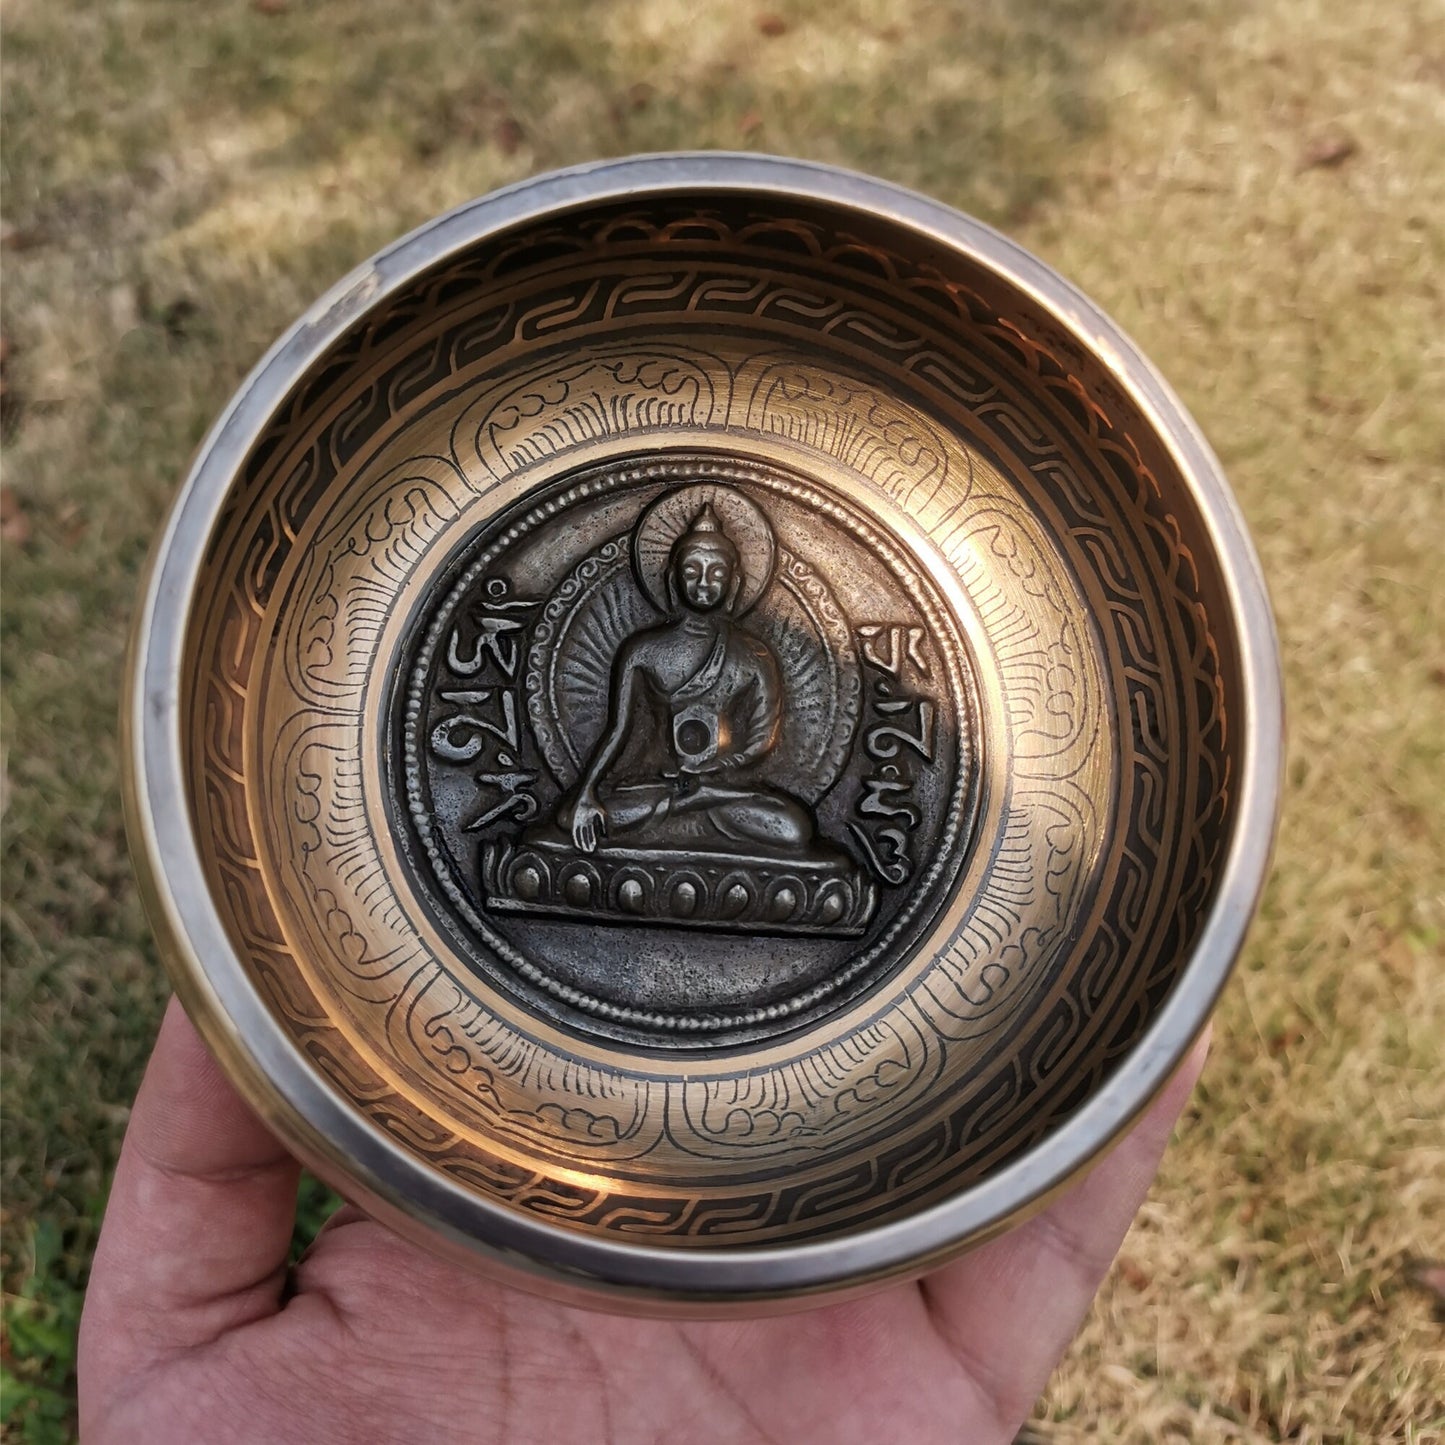 Gandhanra Classical Tibetan Singing Bowl with Amitayus Buddha & OM Mantra Symbol,For Sound Healing,Meditation,Relaxation,Handmade in Nepal